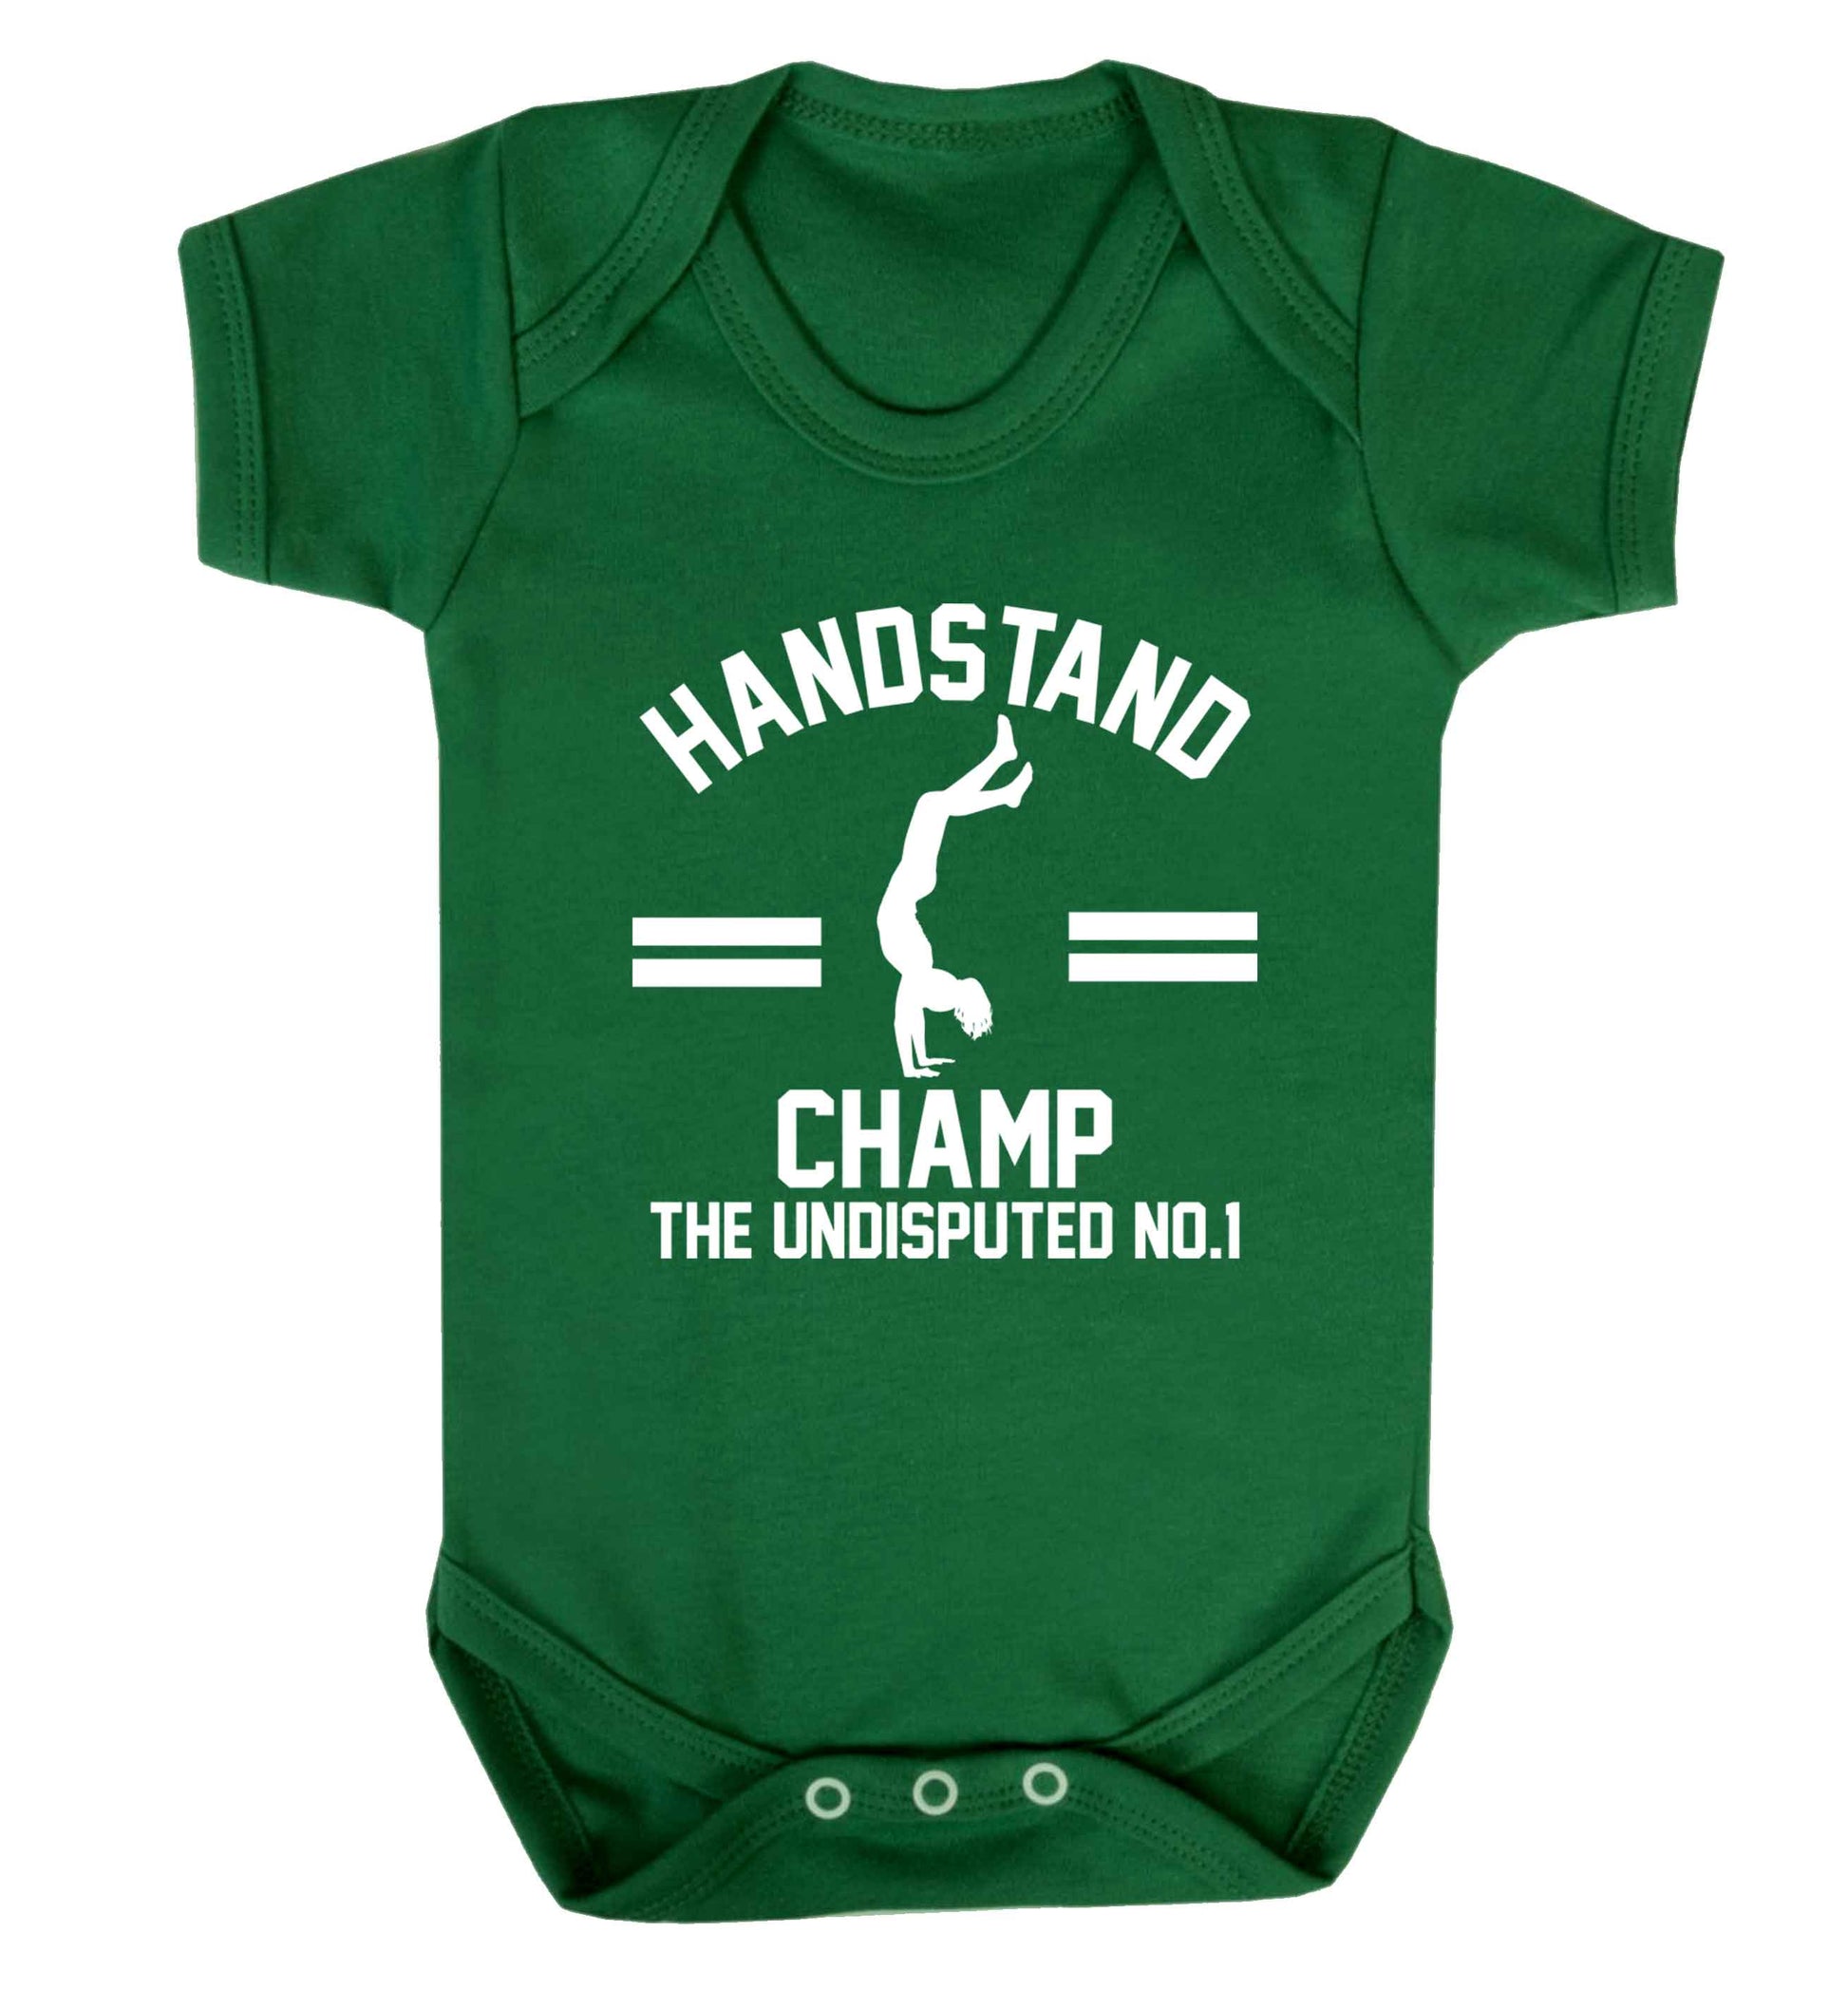 Undisputed handstand championship no.1  Baby Vest green 18-24 months